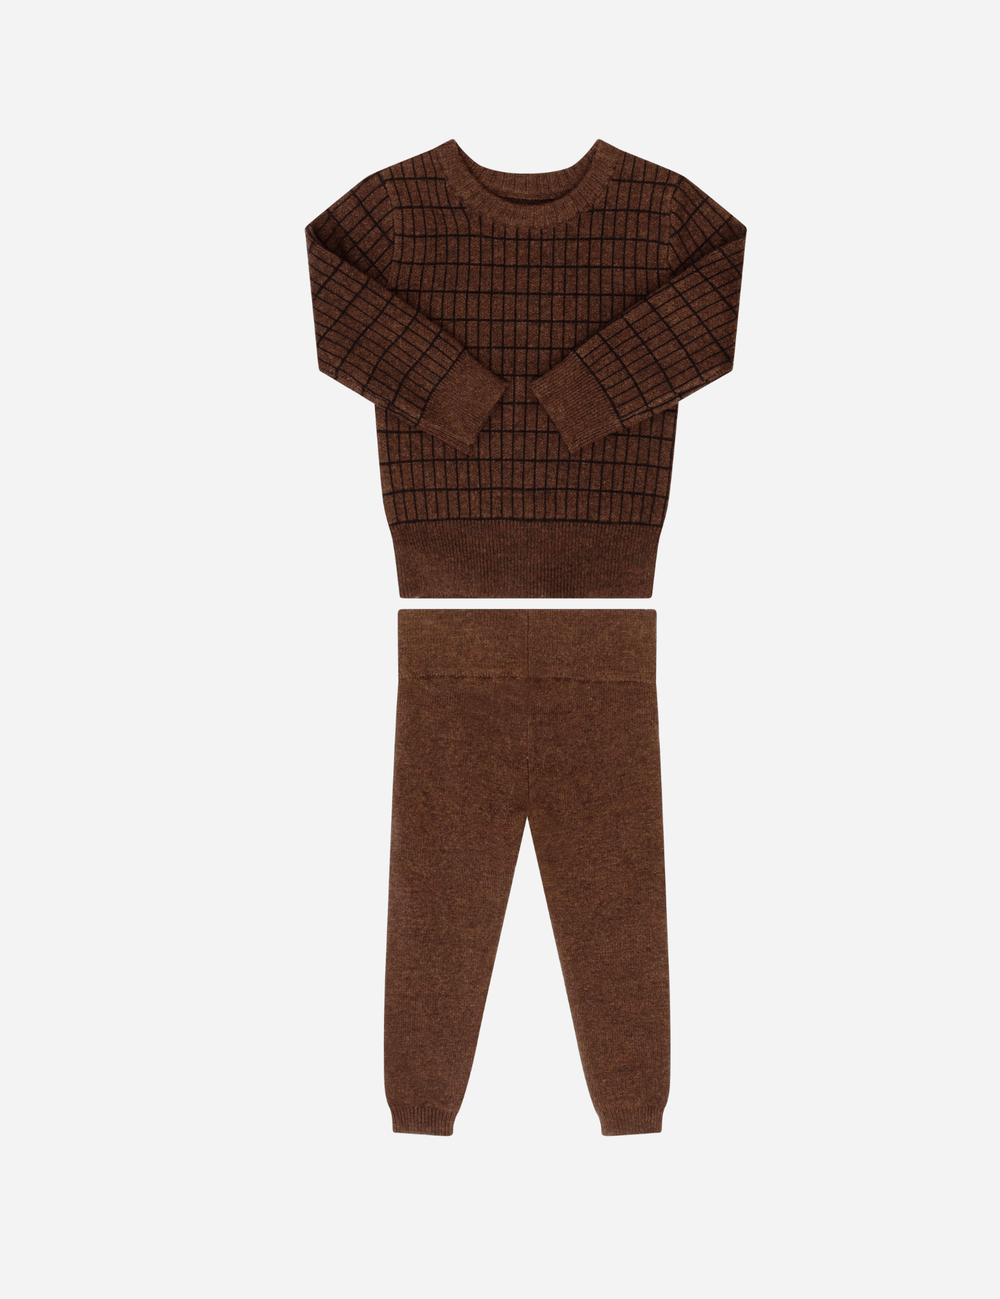 Grid Knit Set - Chocolate